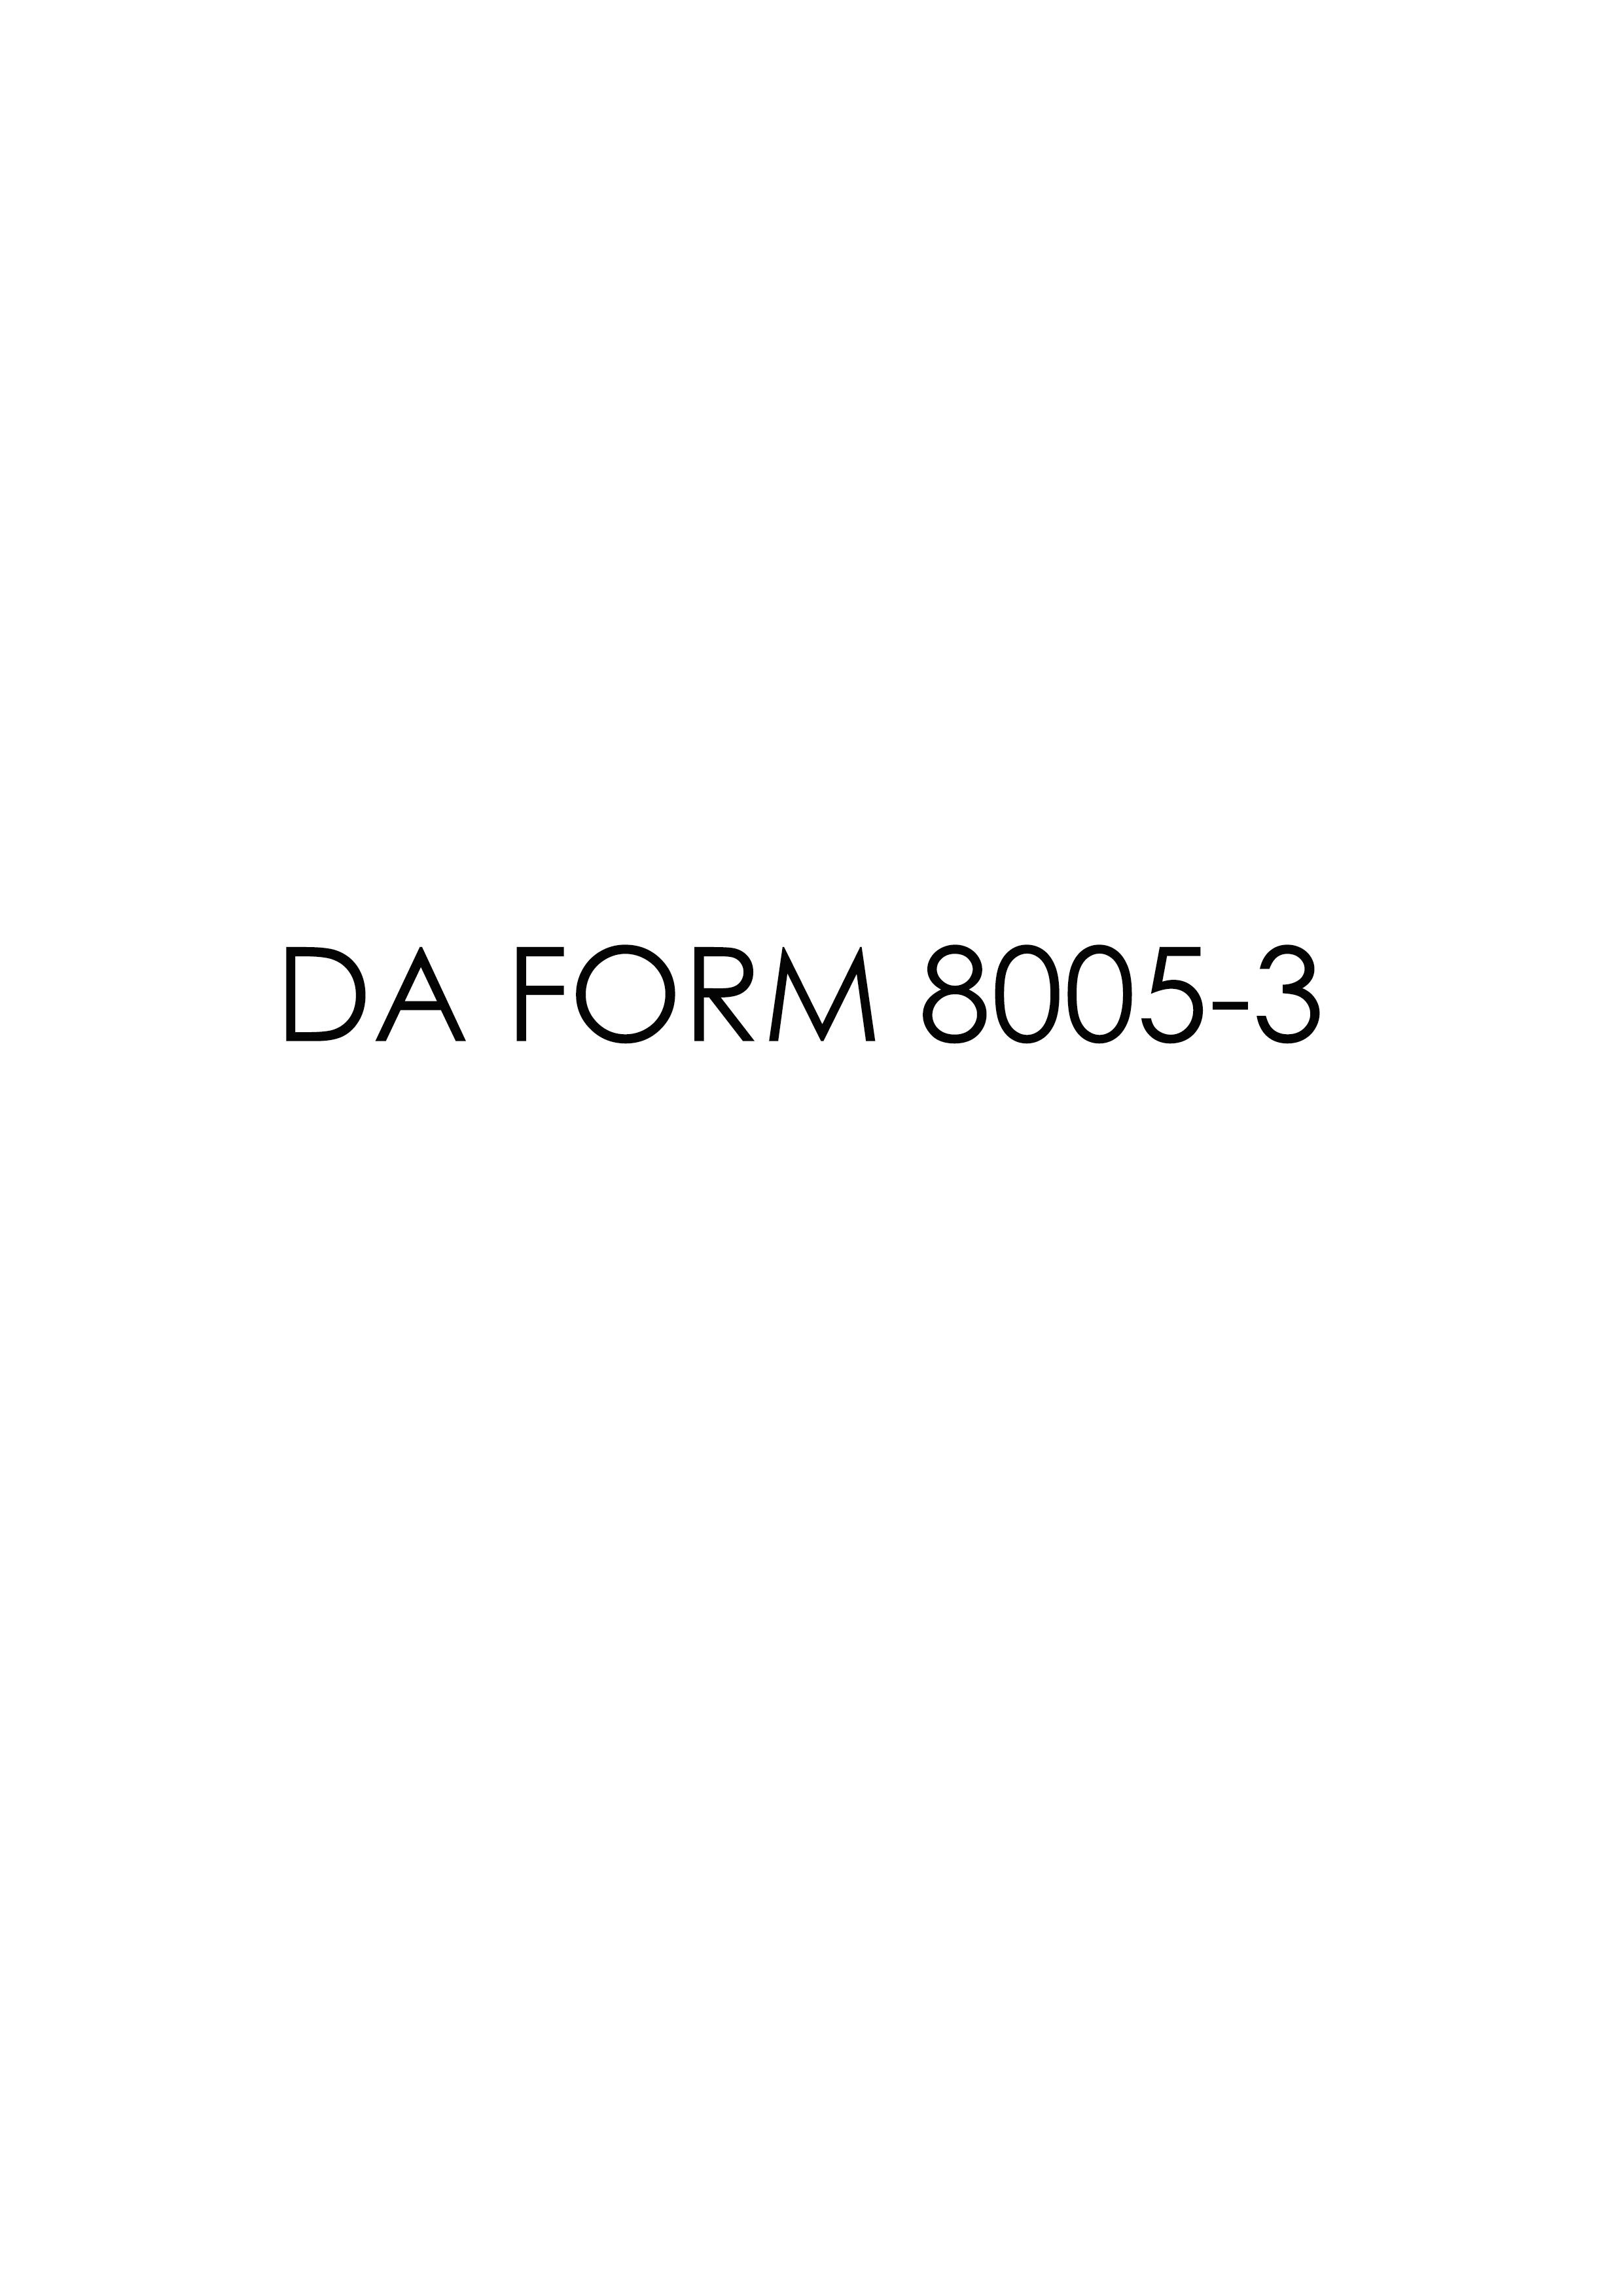 Download da form 8005-3